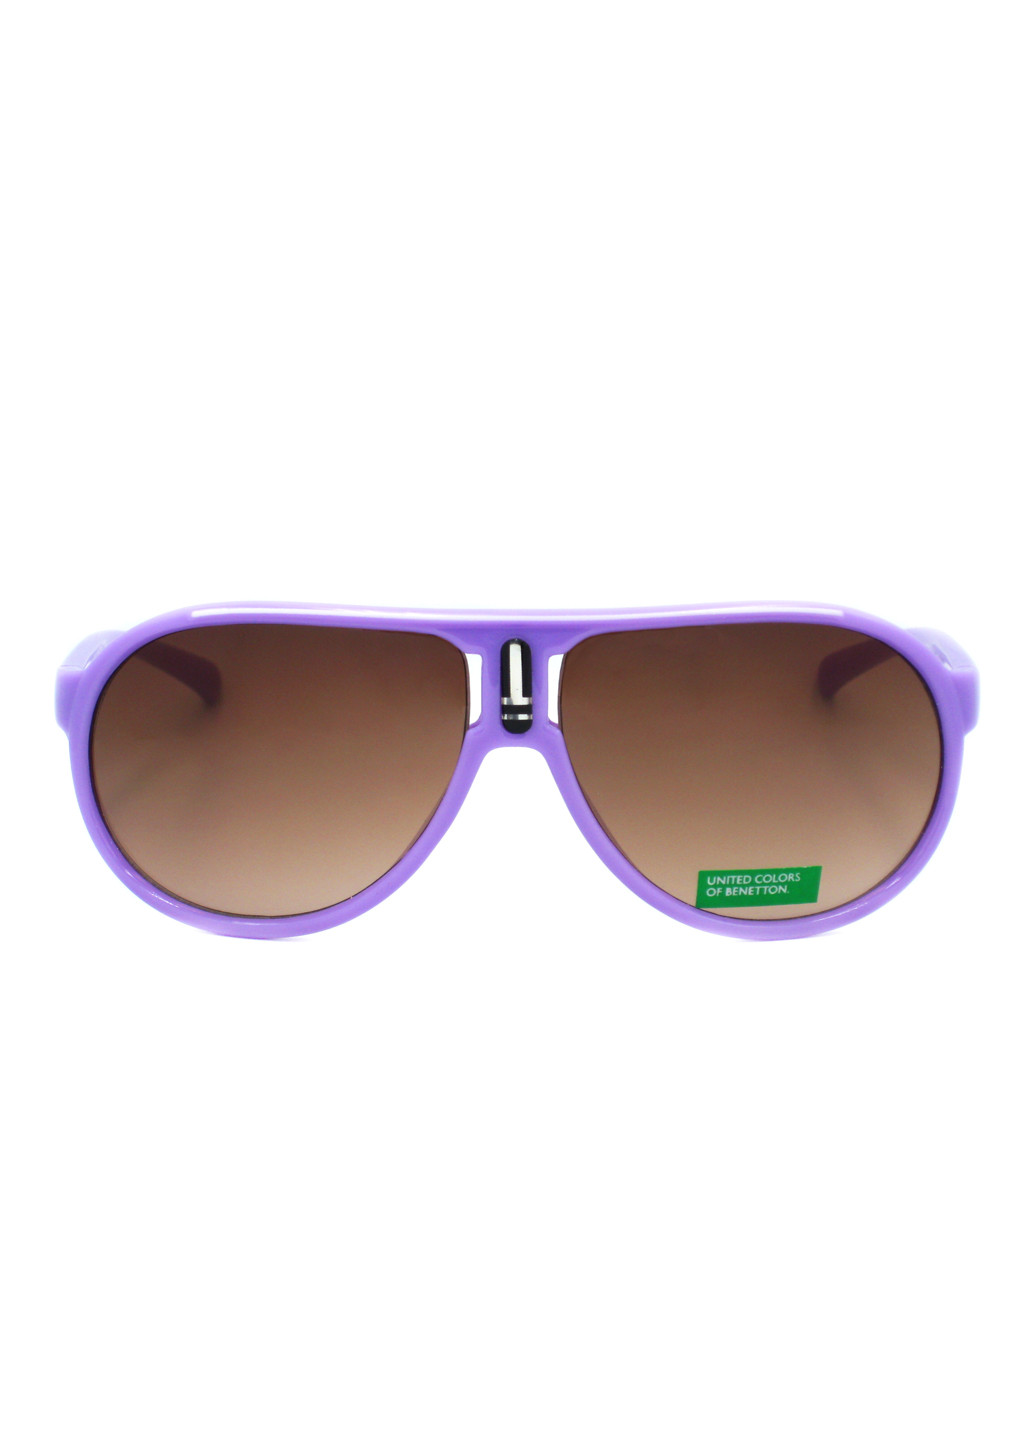 Солнцезащитные очки United Colors of Benetton bb524s (260947020)